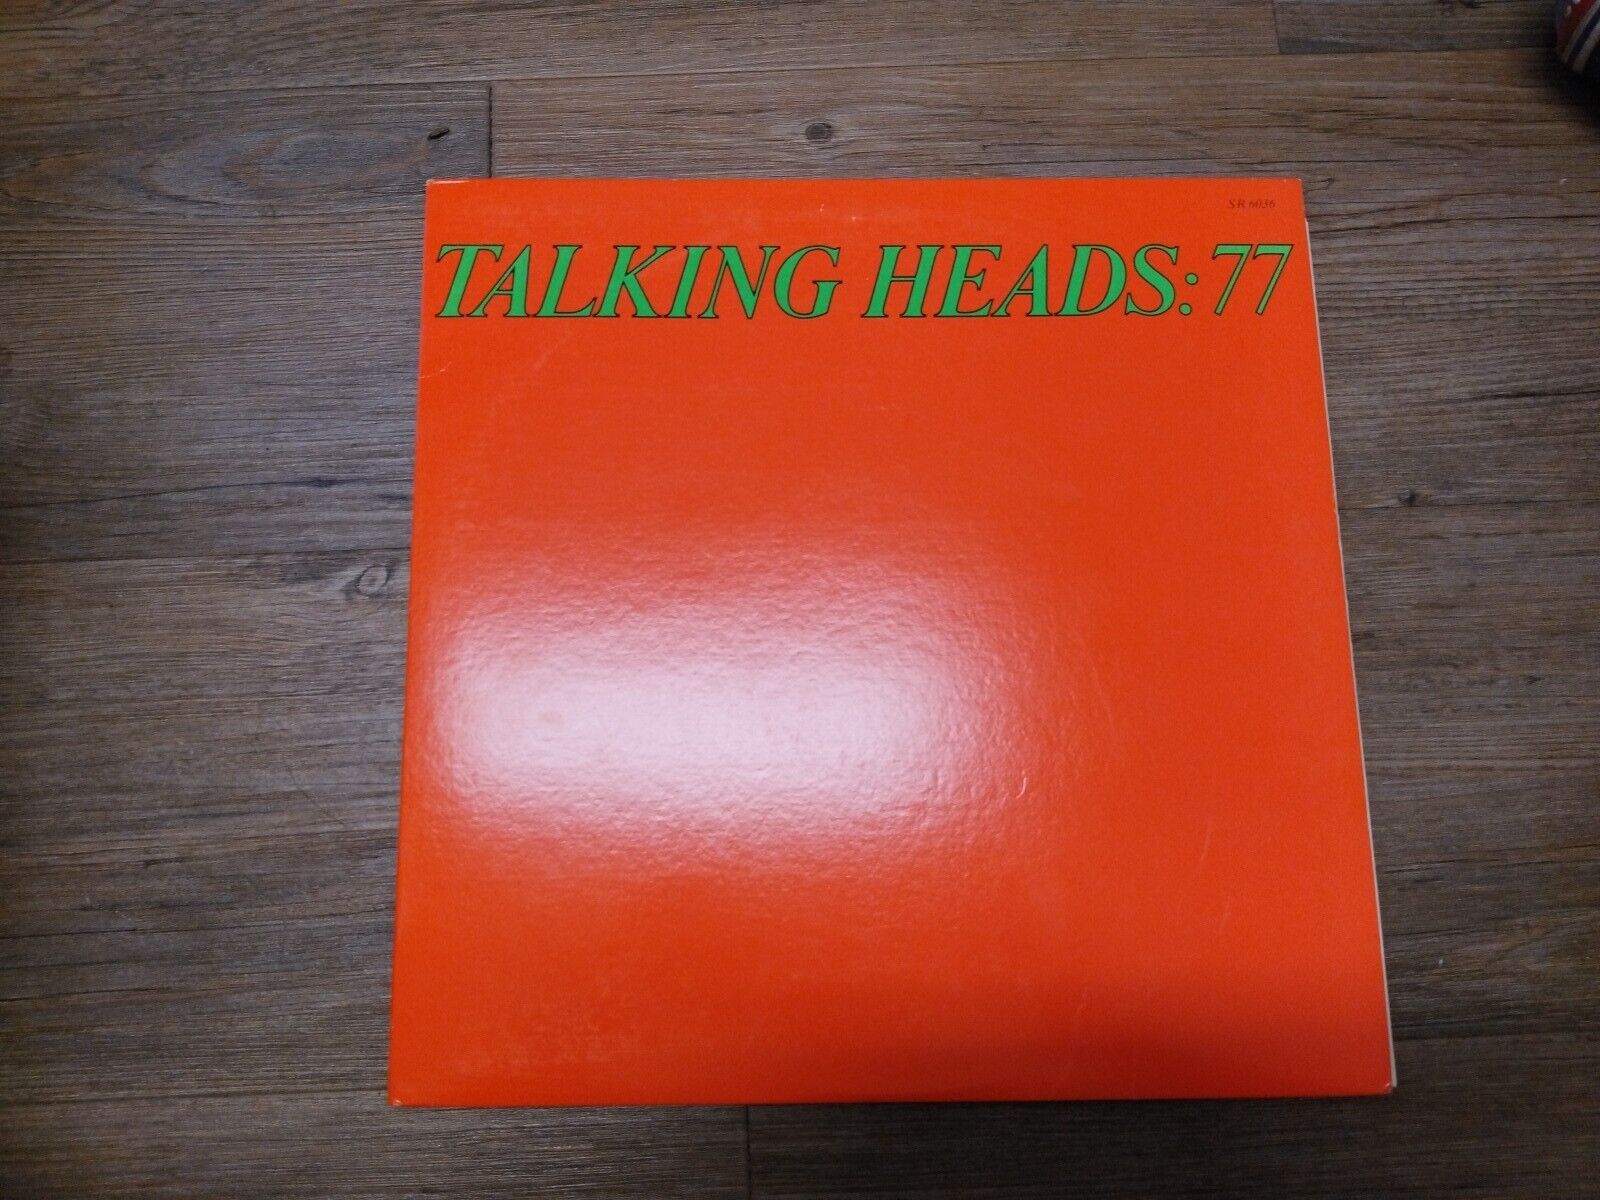 TALKING HEADS: 77  VINYL LP ALBUM   1977  SR 6036